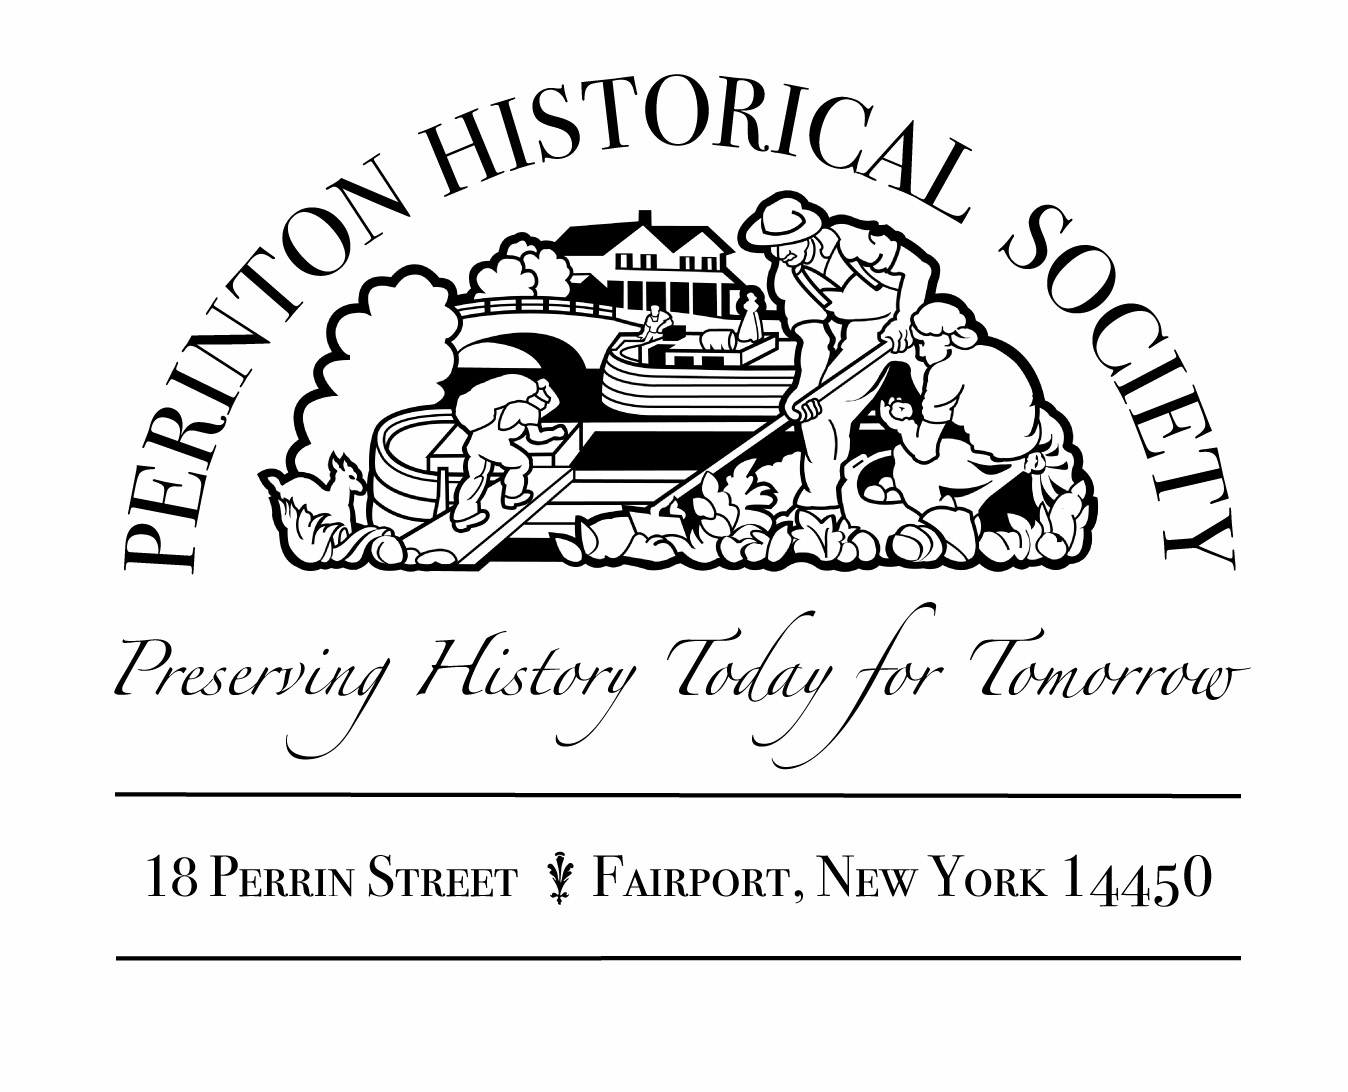 Perinton Historical Society & Fairport Museum